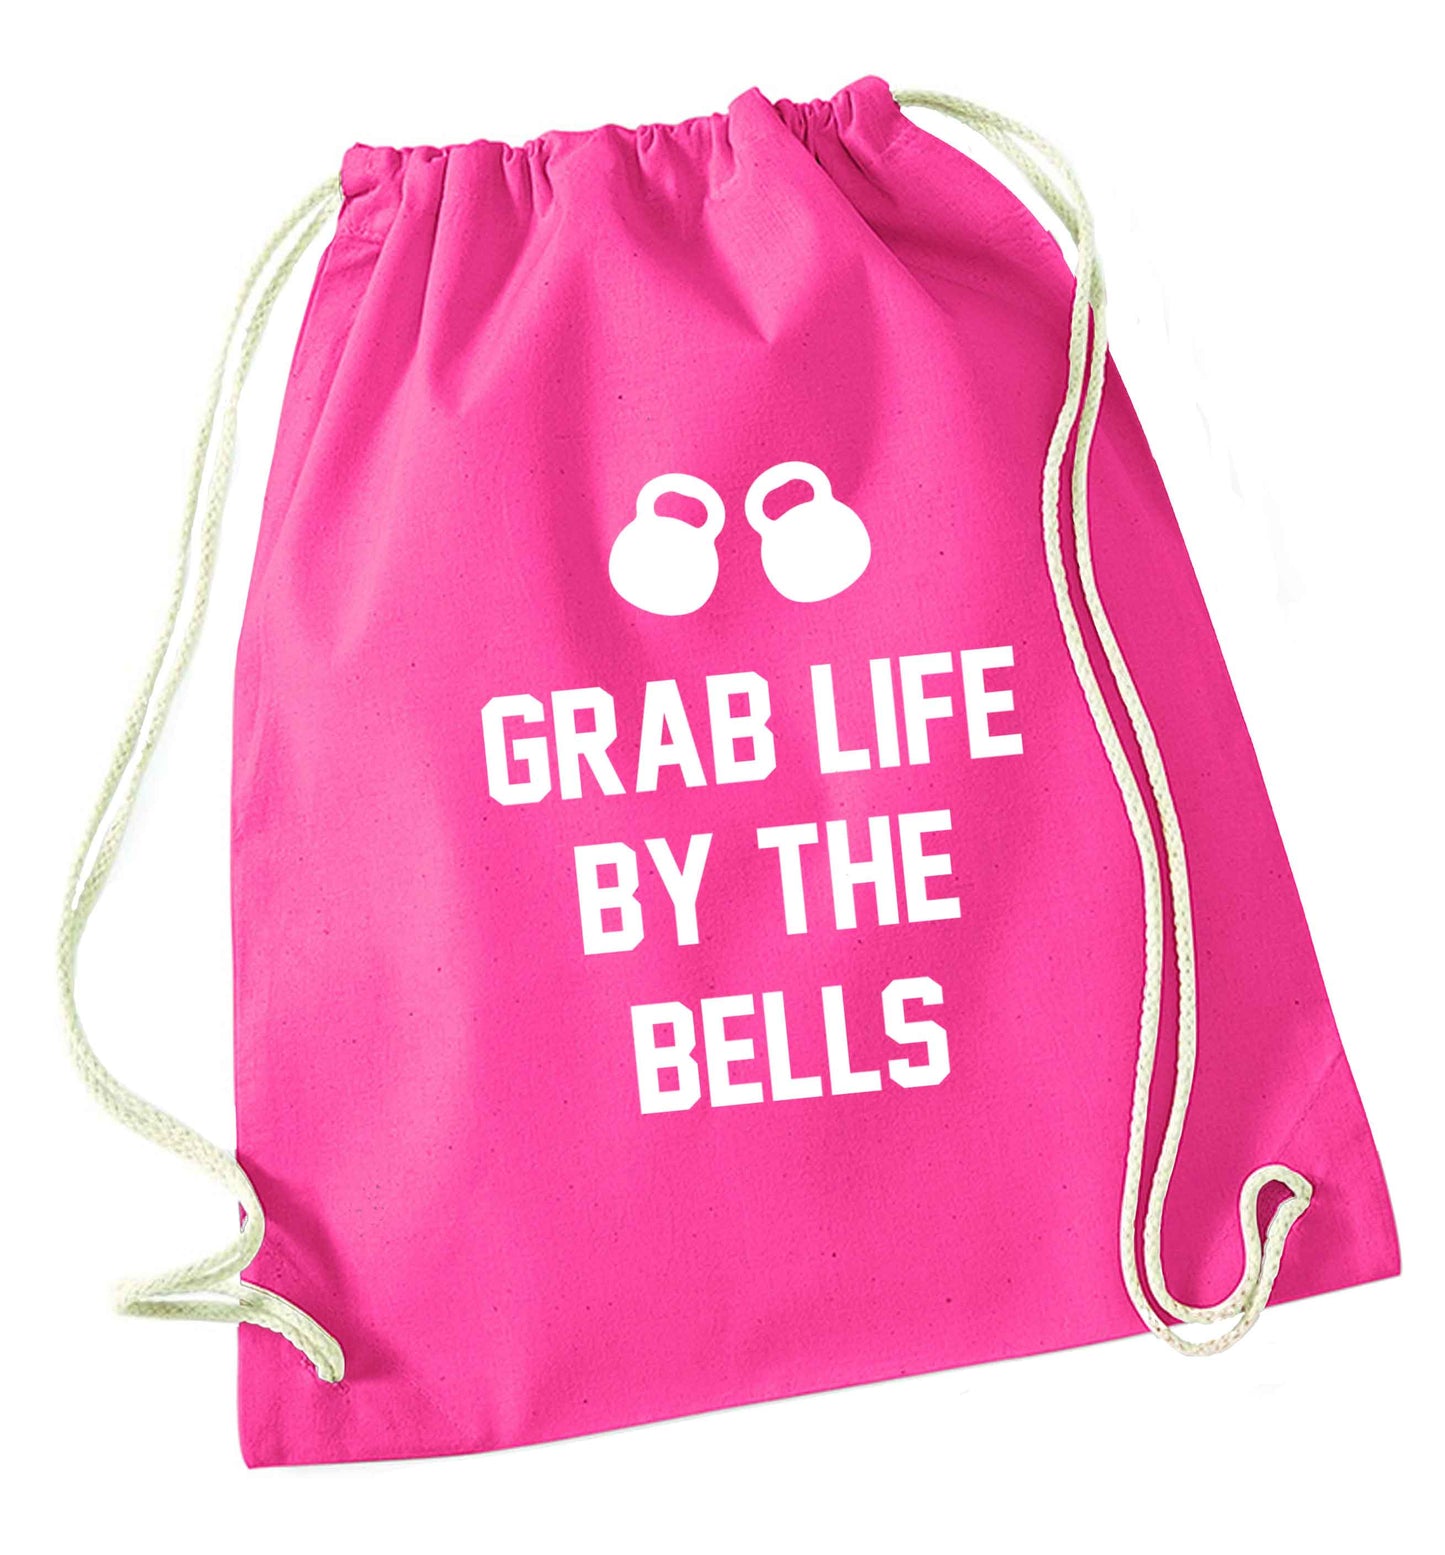 Grab life by the bells pink drawstring bag